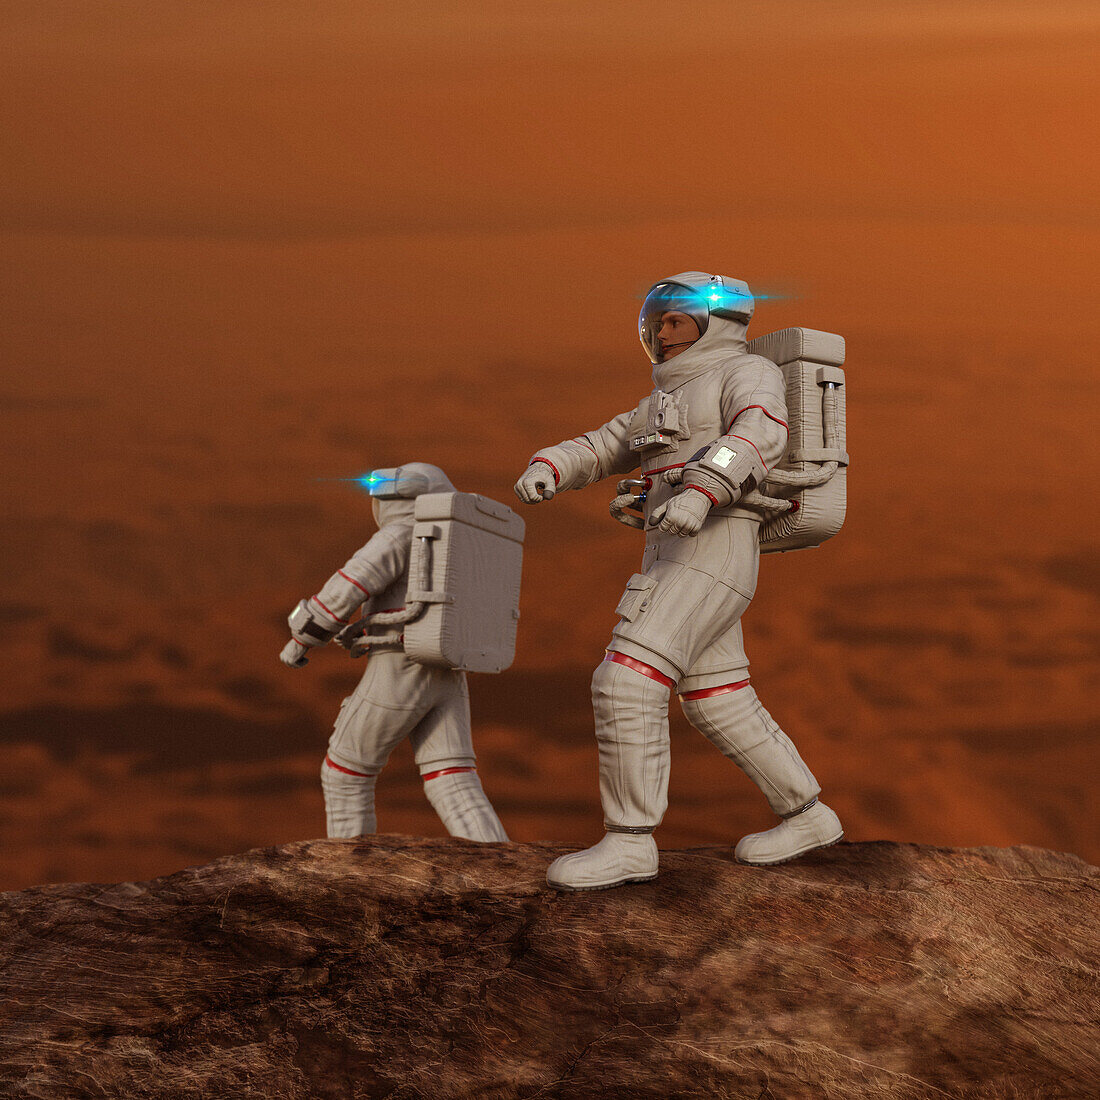 Astronauts walking on the surface of Mars, illustration